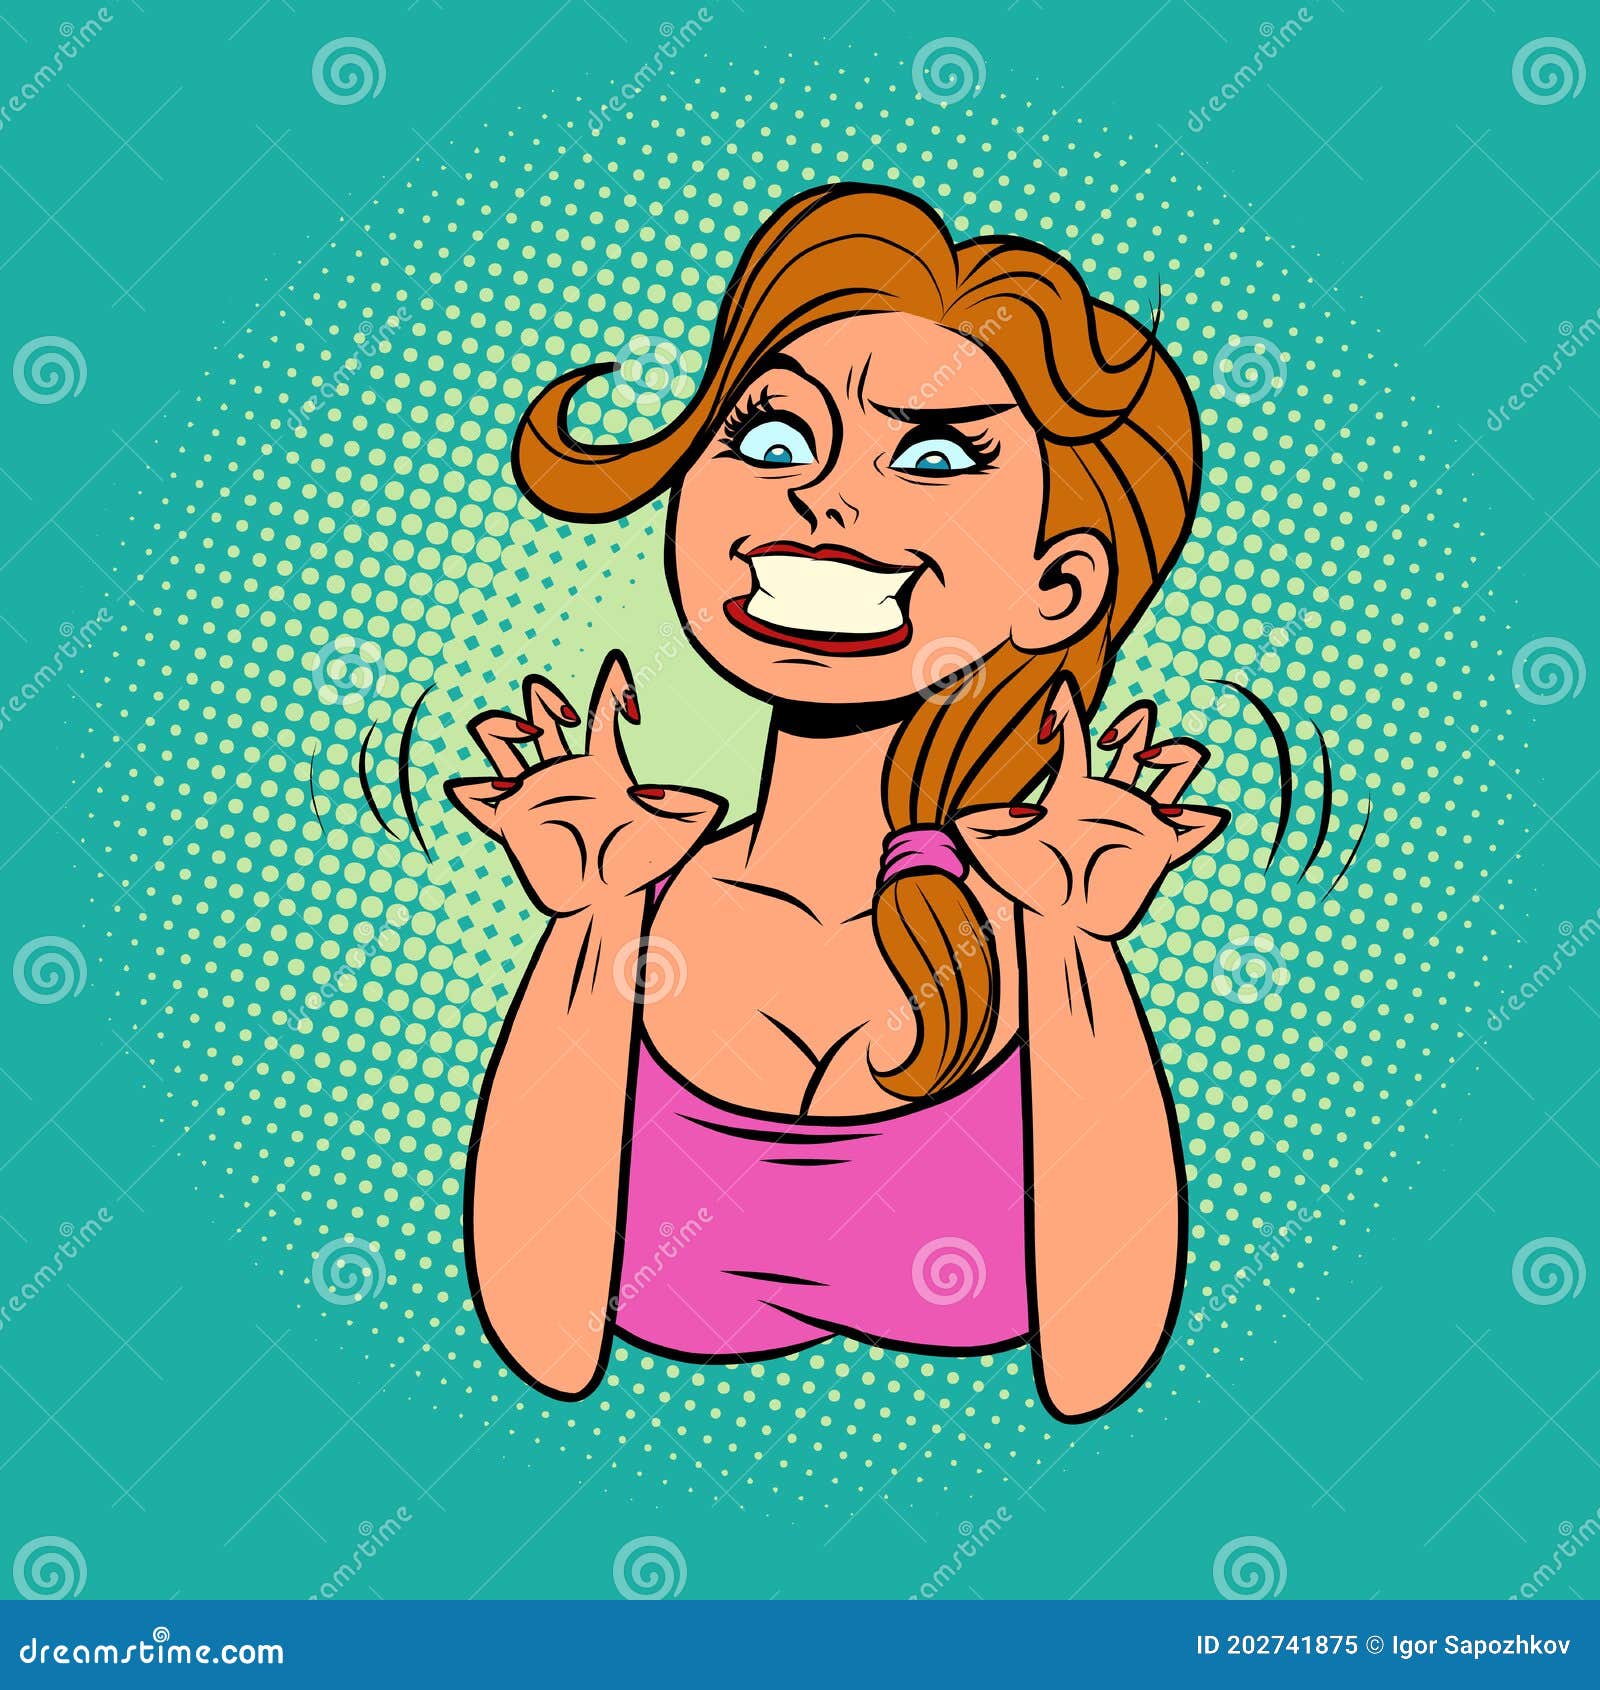 Funny insidious evil woman stock vector. Illustration of girl - 202741875